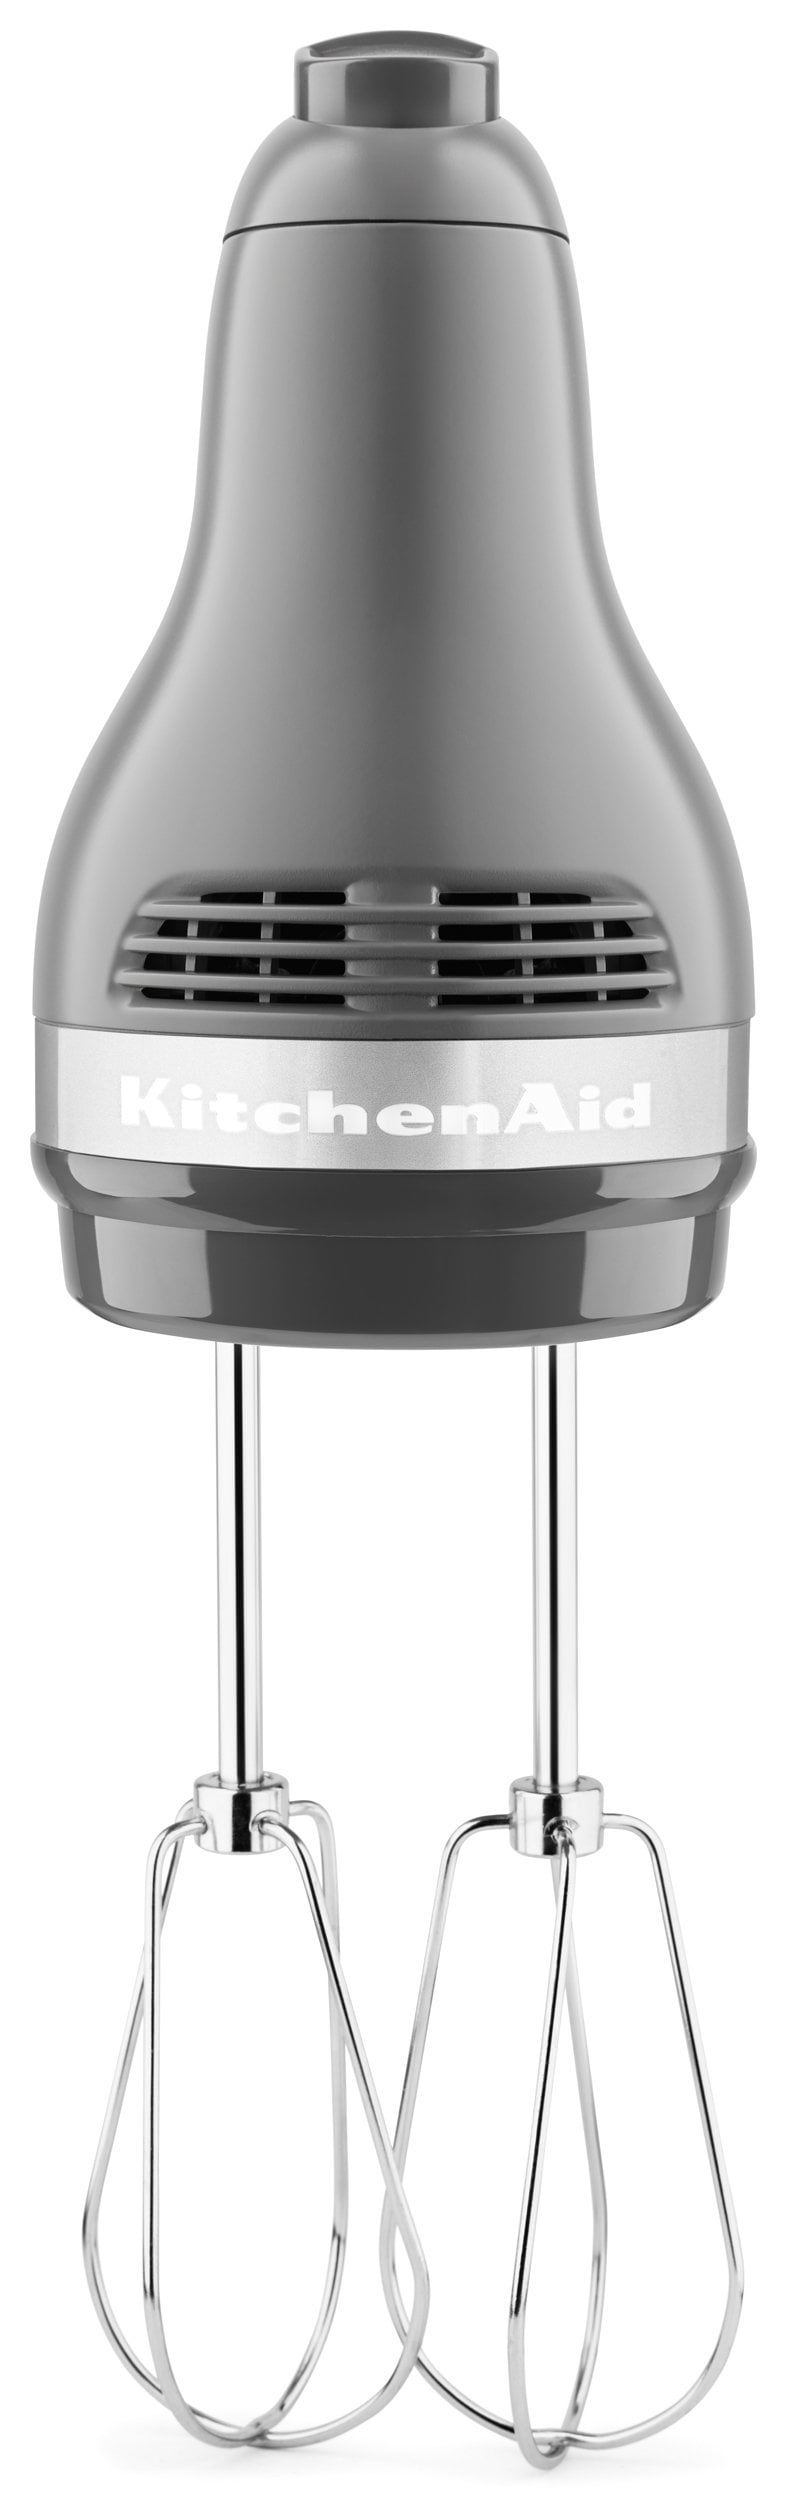  KitchenAid 5 Ultra Power Speed Hand Mixer - KHM512, Aqua Sky:  Home & Kitchen